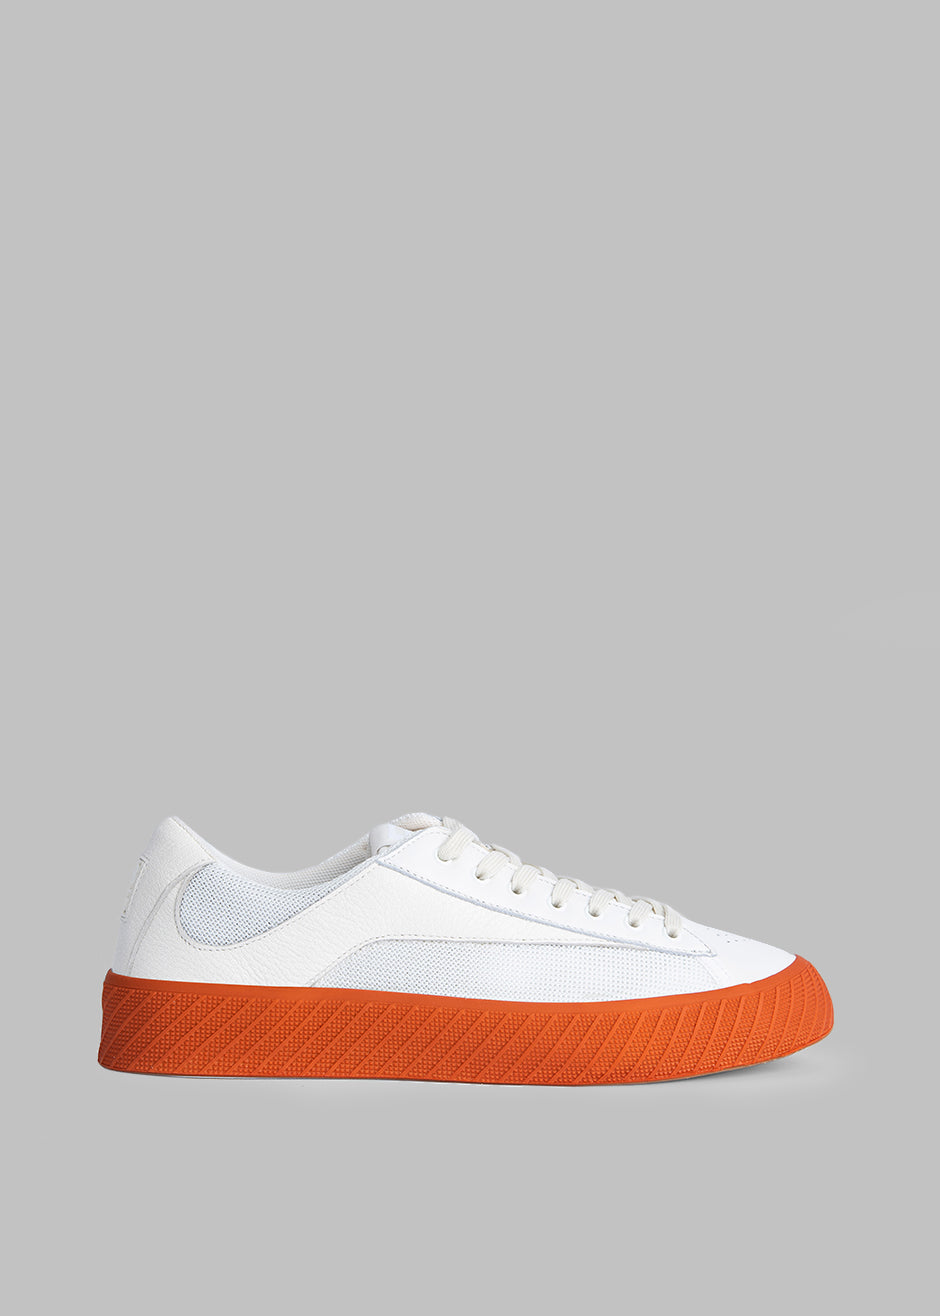 BY FAR Rodina Sneakers - Tangerine On White